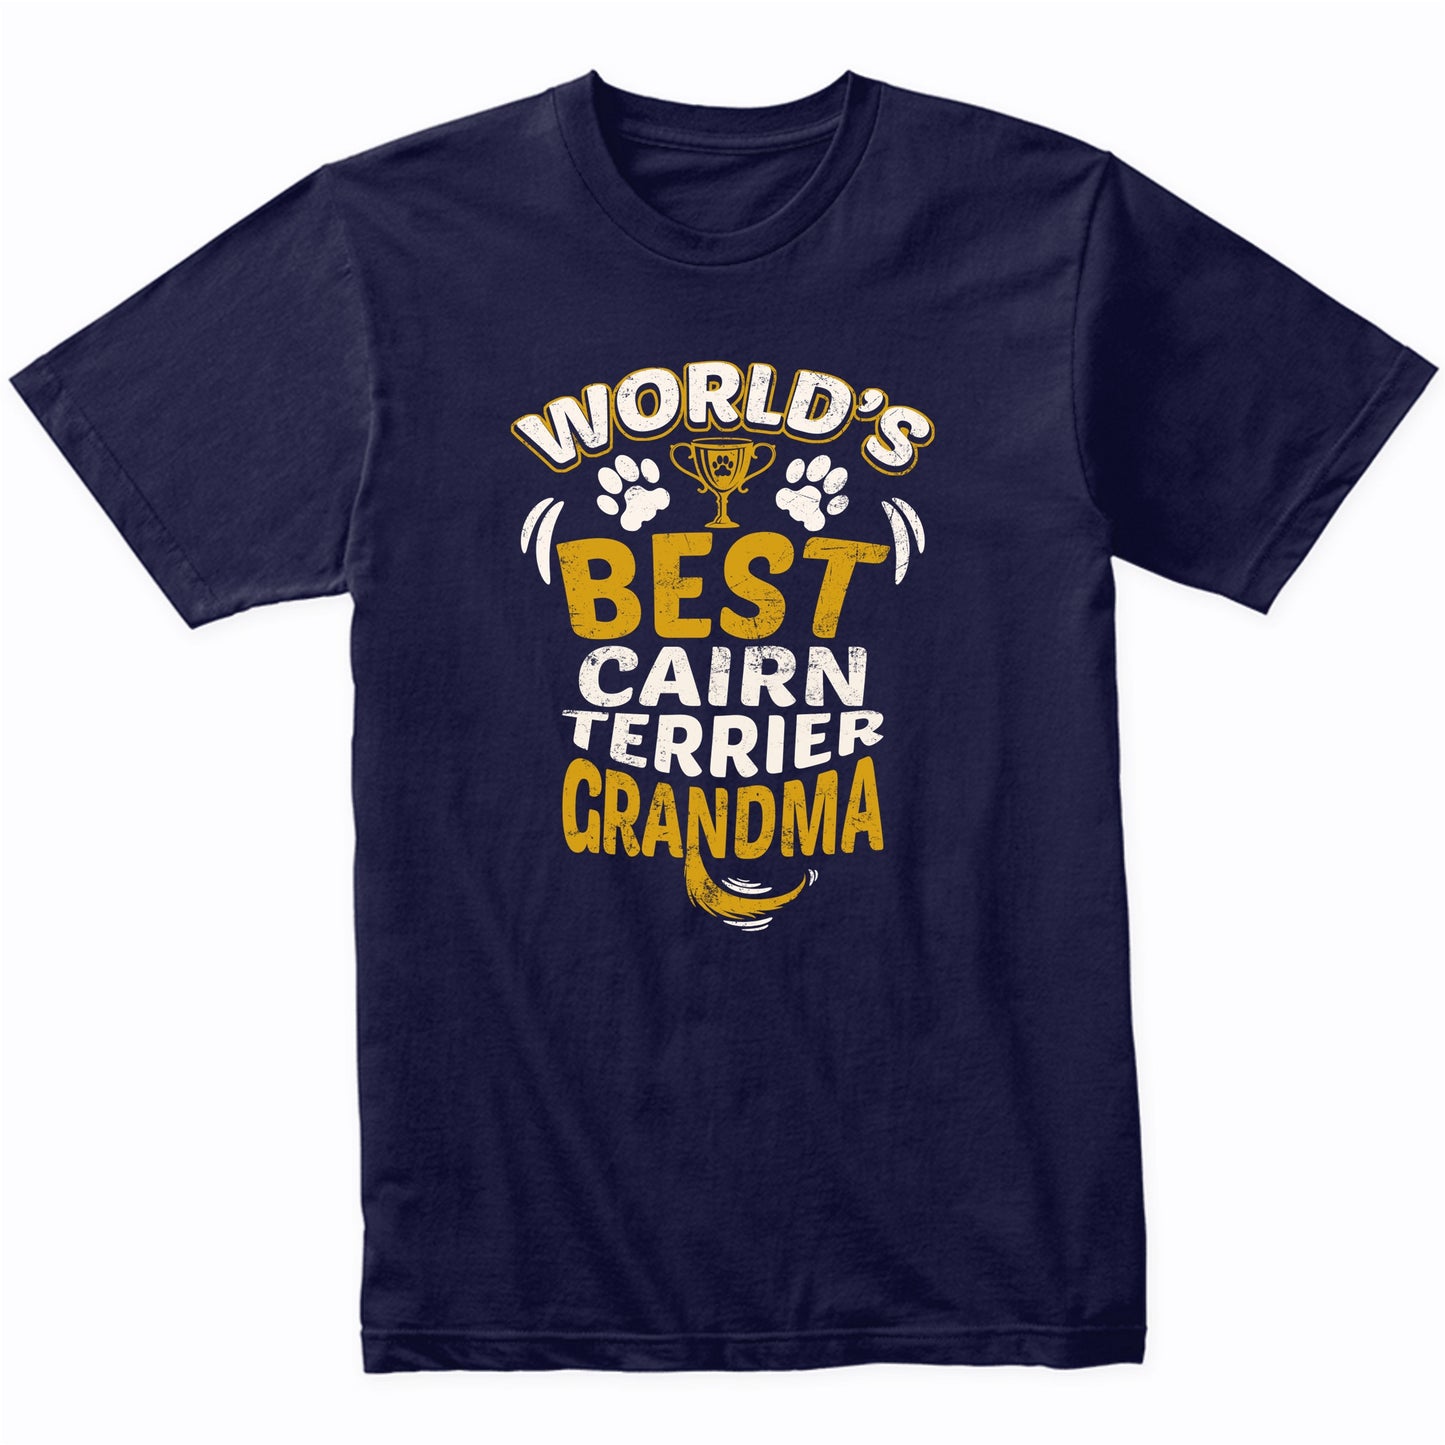 World's Best Cairn Terrier Grandma Graphic T-Shirt